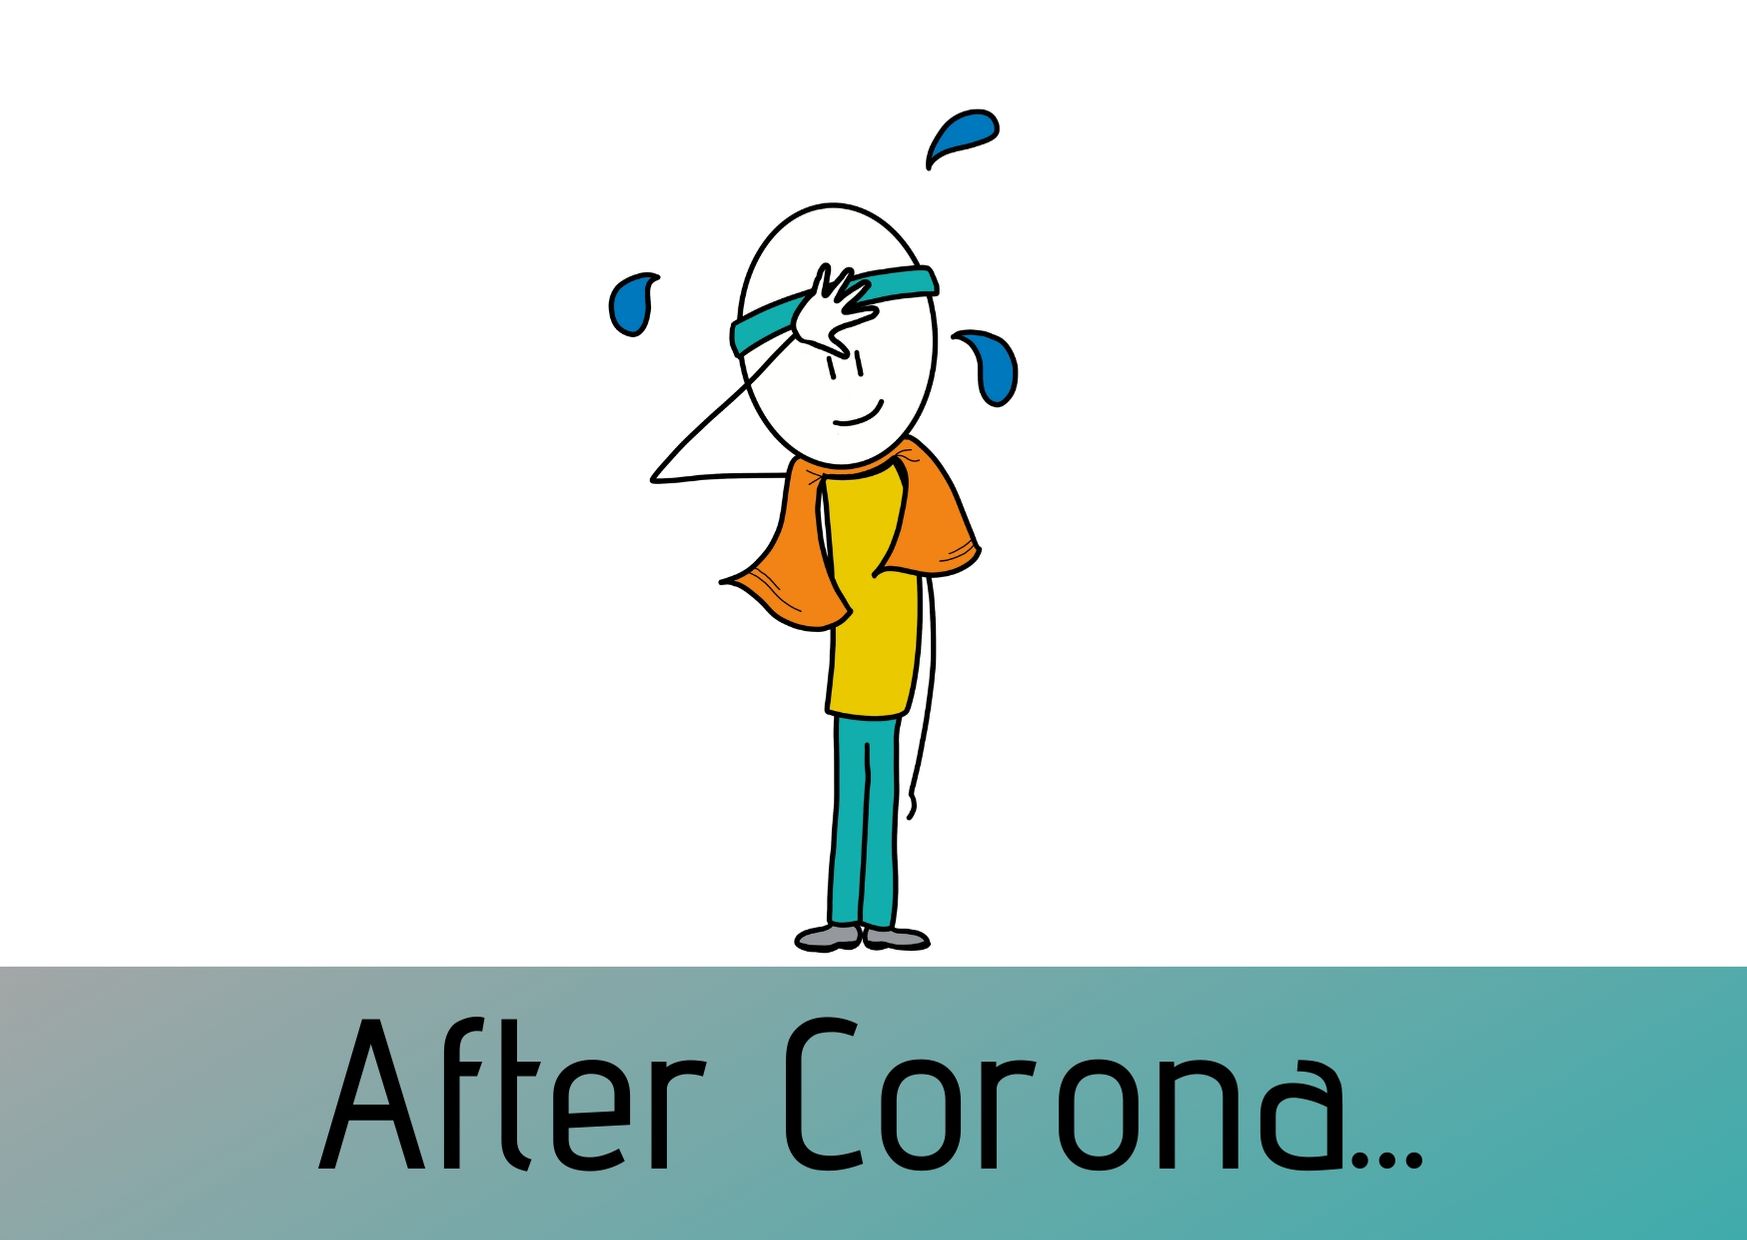 After Corona